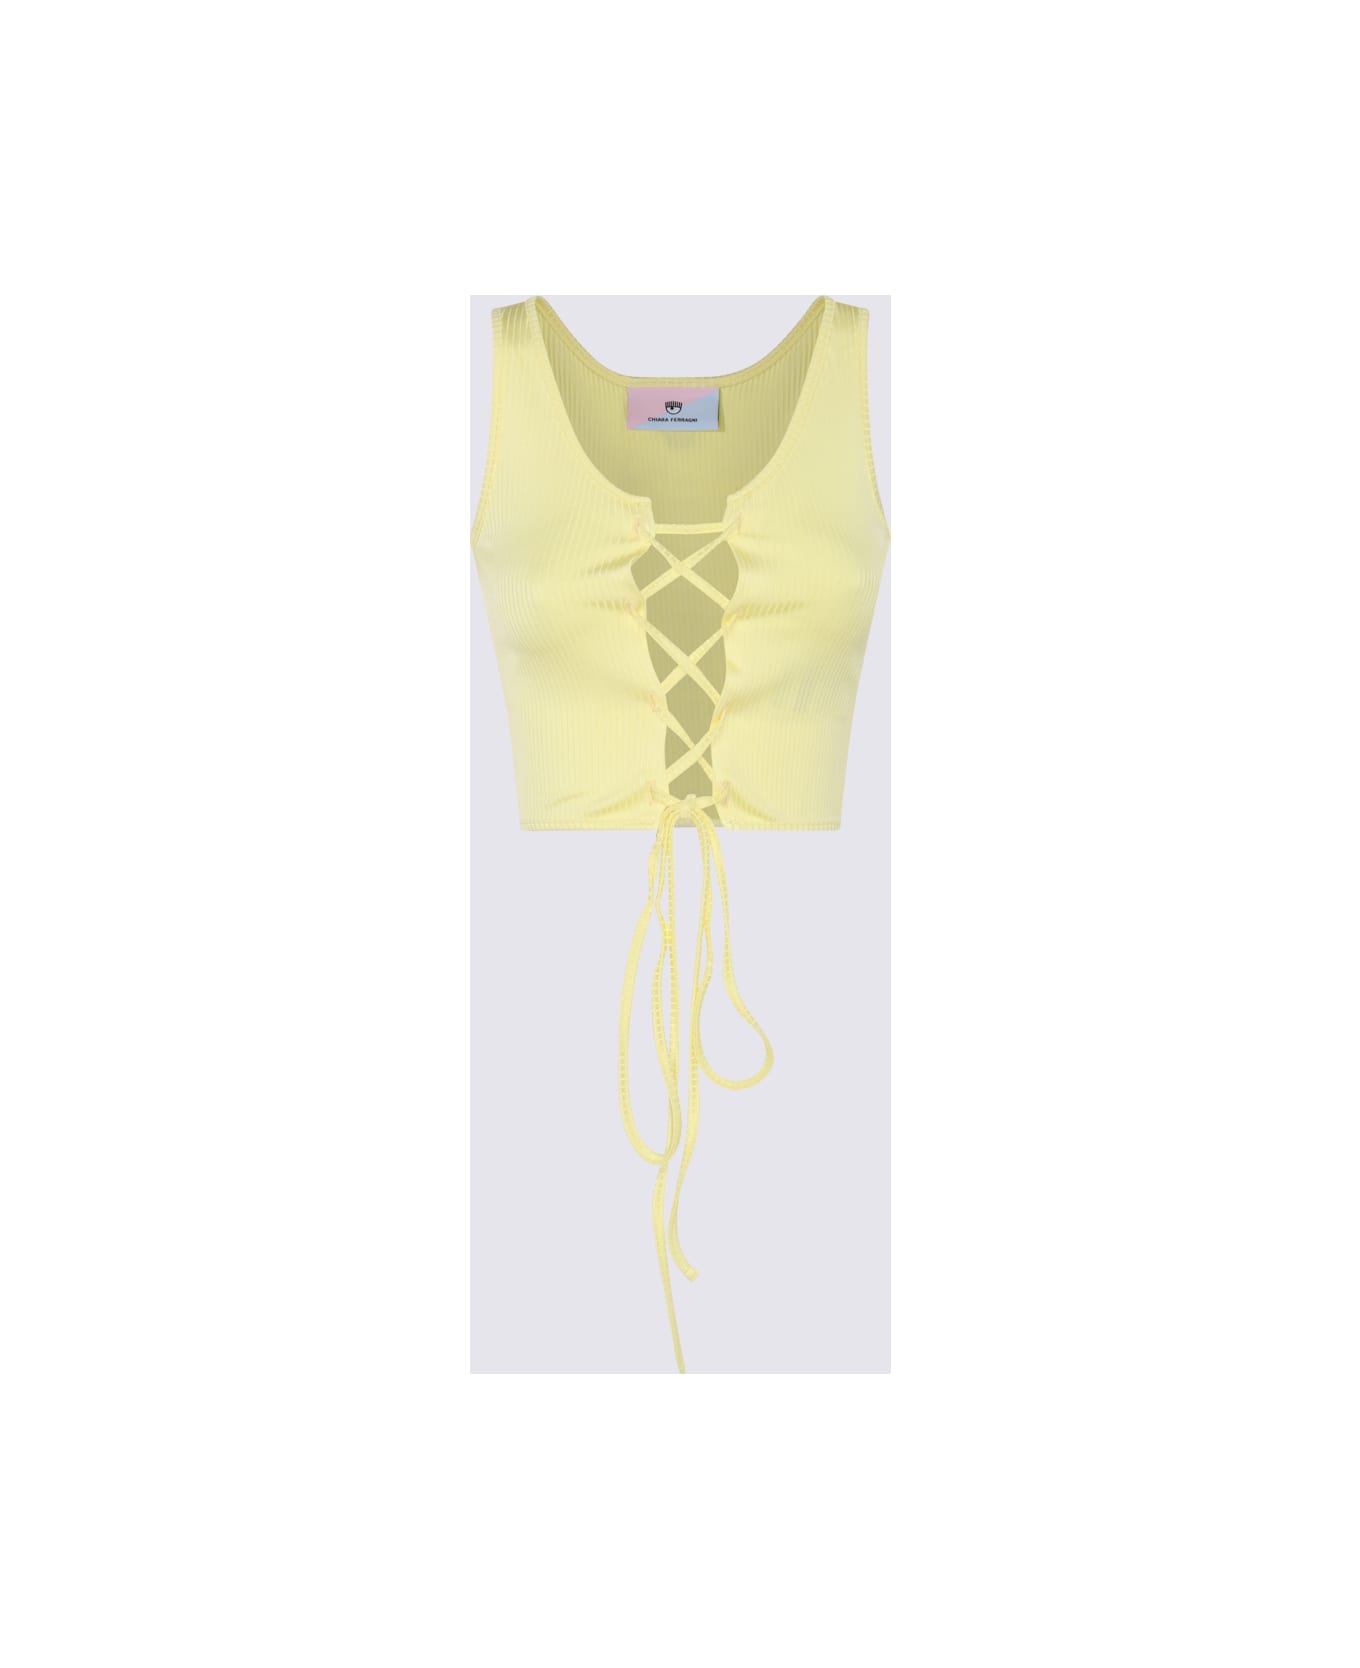 Chiara Ferragni Wax Yellow Cotton Stretch Top - WAX YELLOW